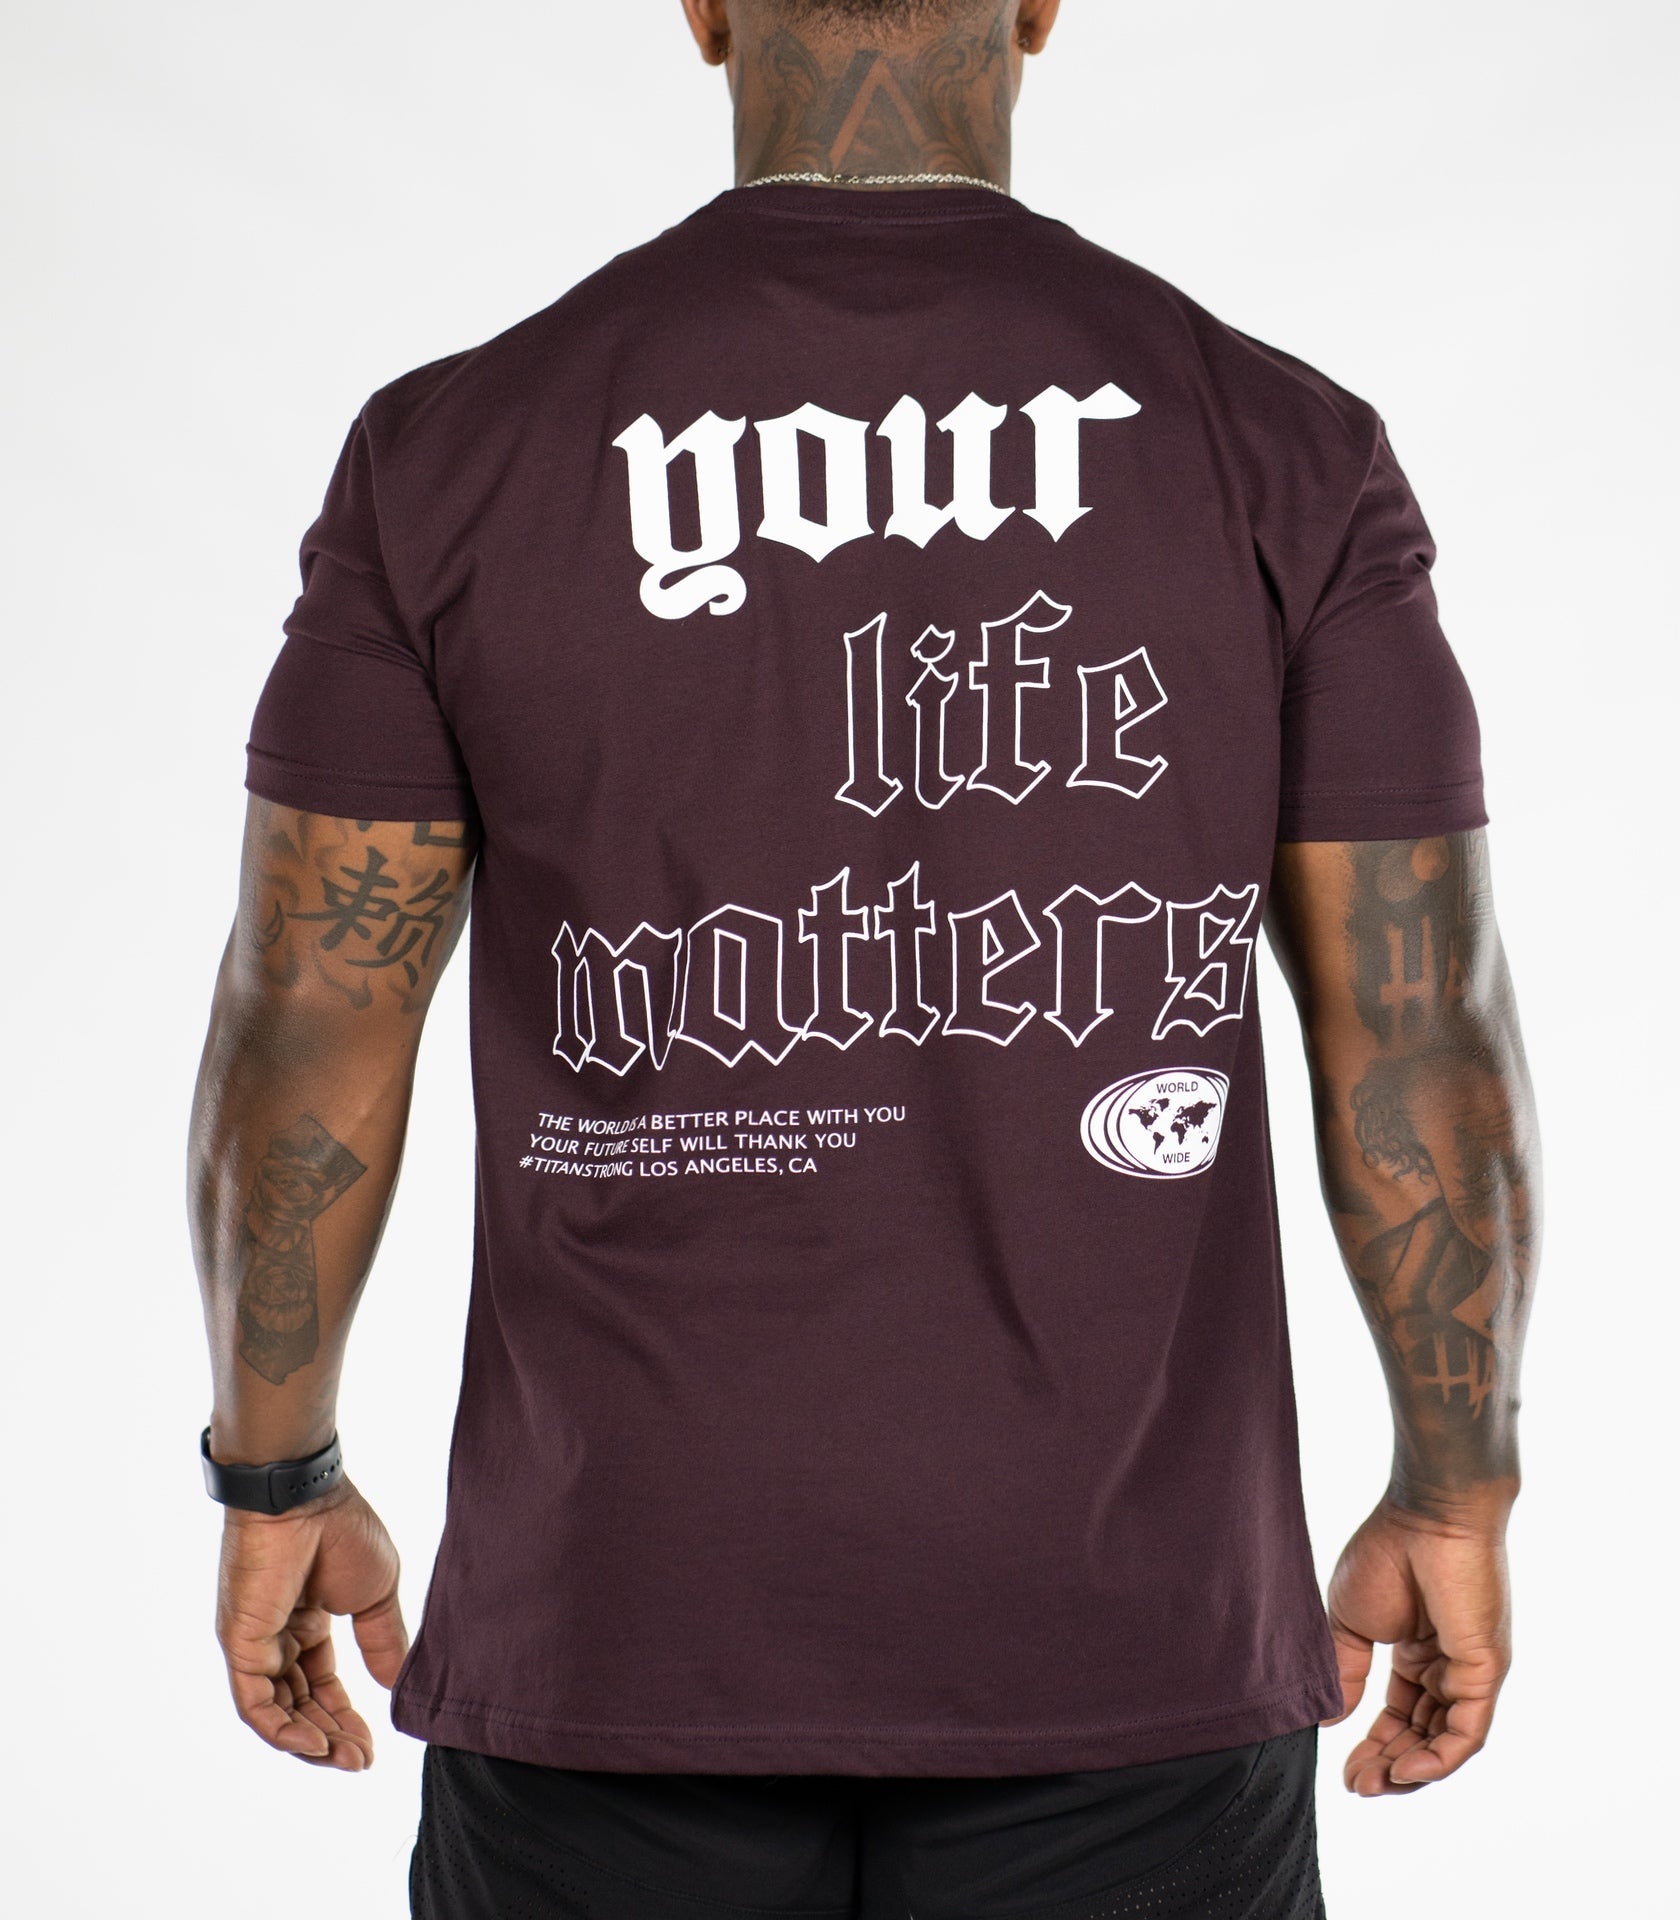 Your Life Matters Shirt